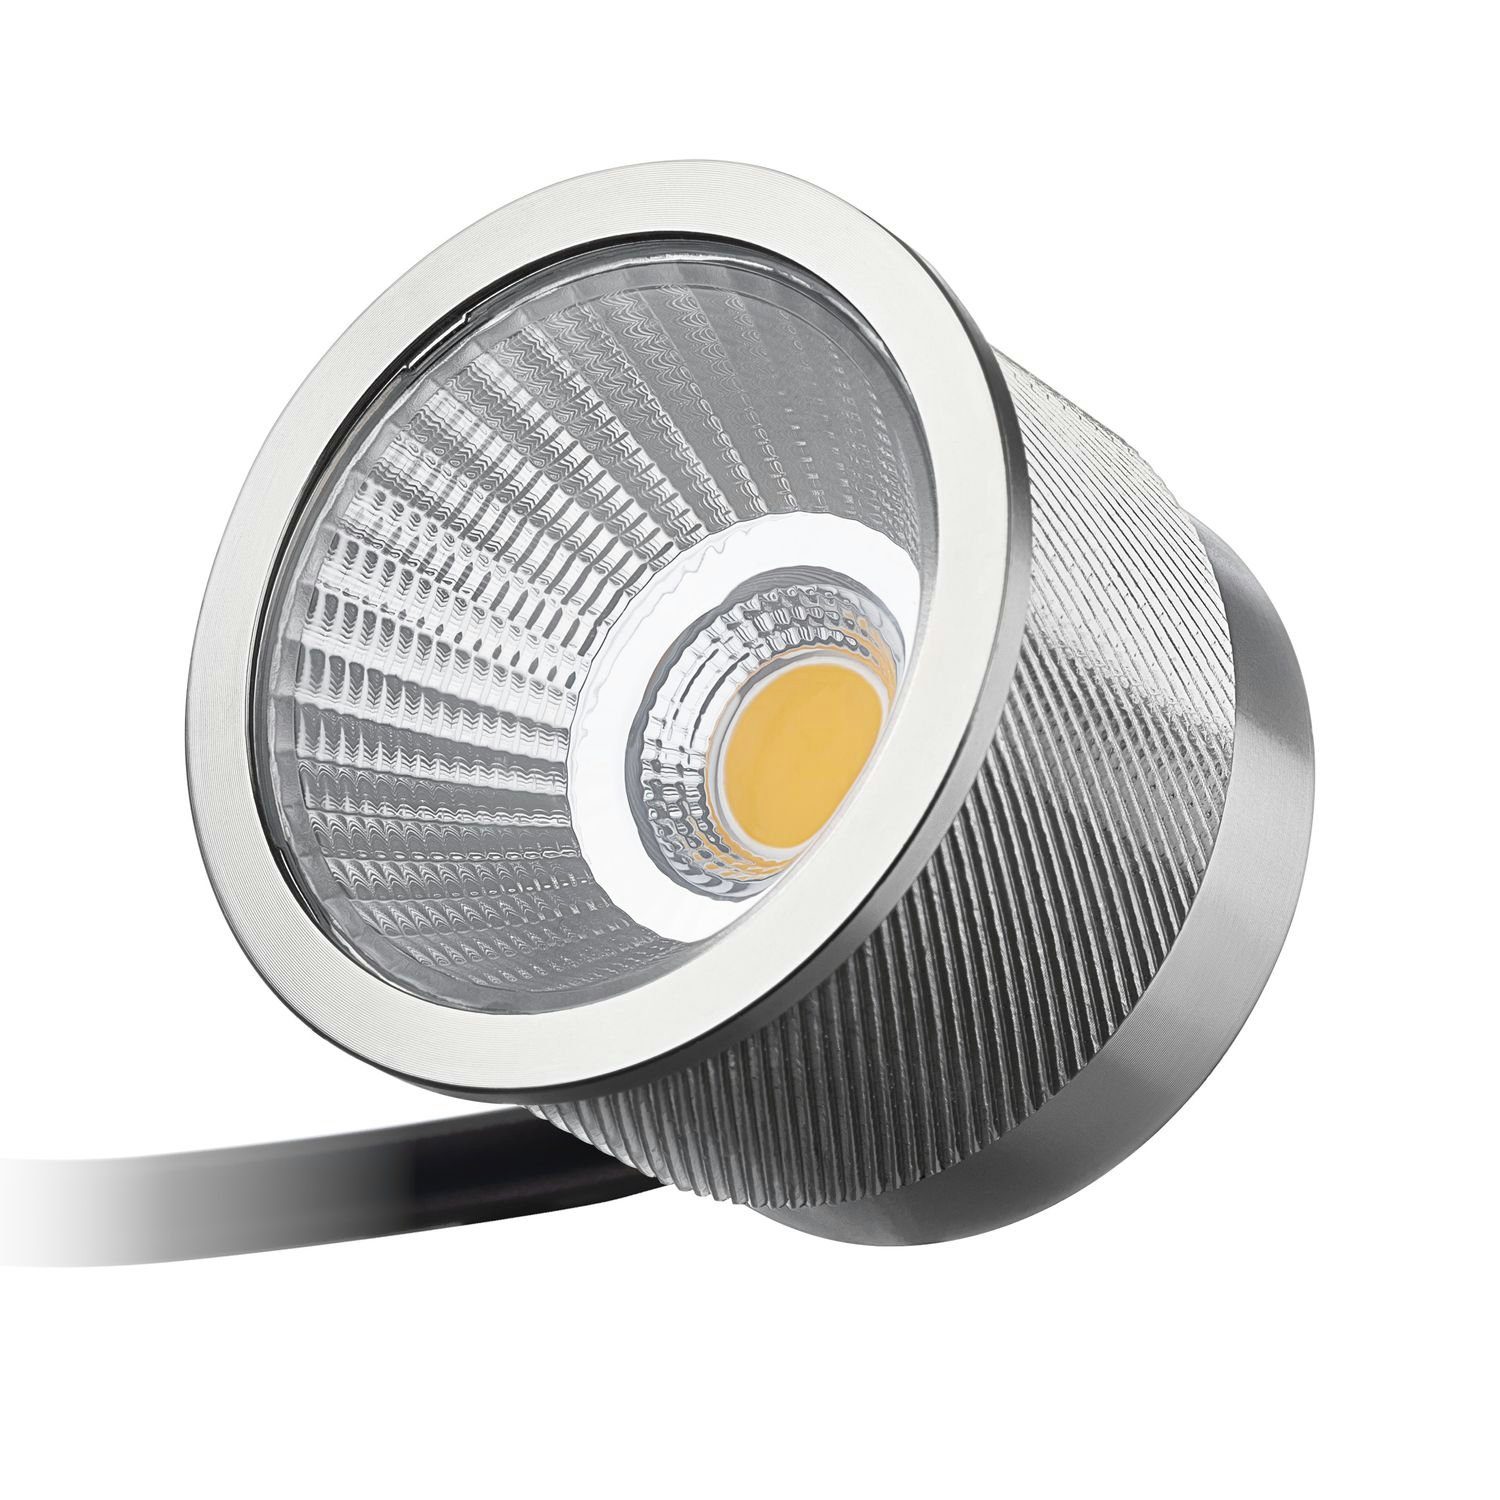 LEDANDO LED Einbaustrahler 10er mit Einbaustrahler Set Leuchtmittel in weiß extra 6,5W LED flach